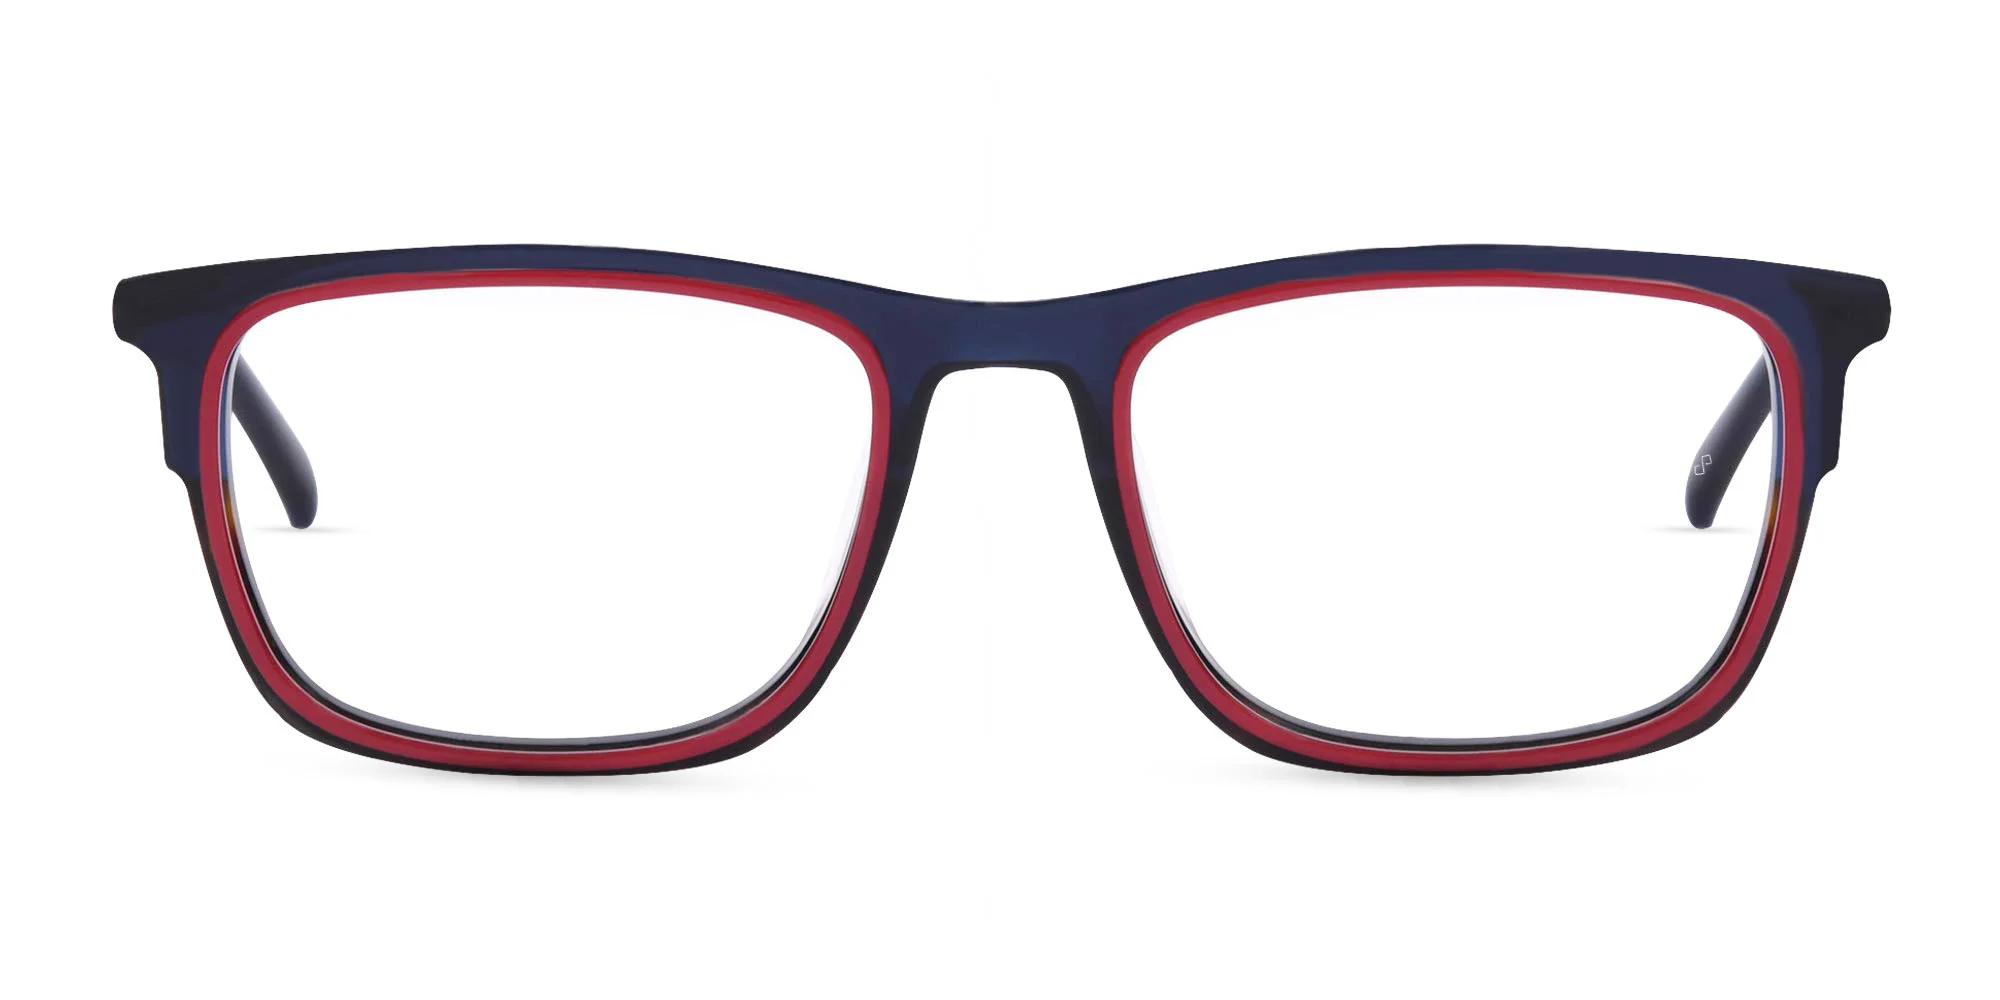 EasyClip EC227 Eyeglasses - EasyClip by Aspex Authorized Retailer |  coolframes.com